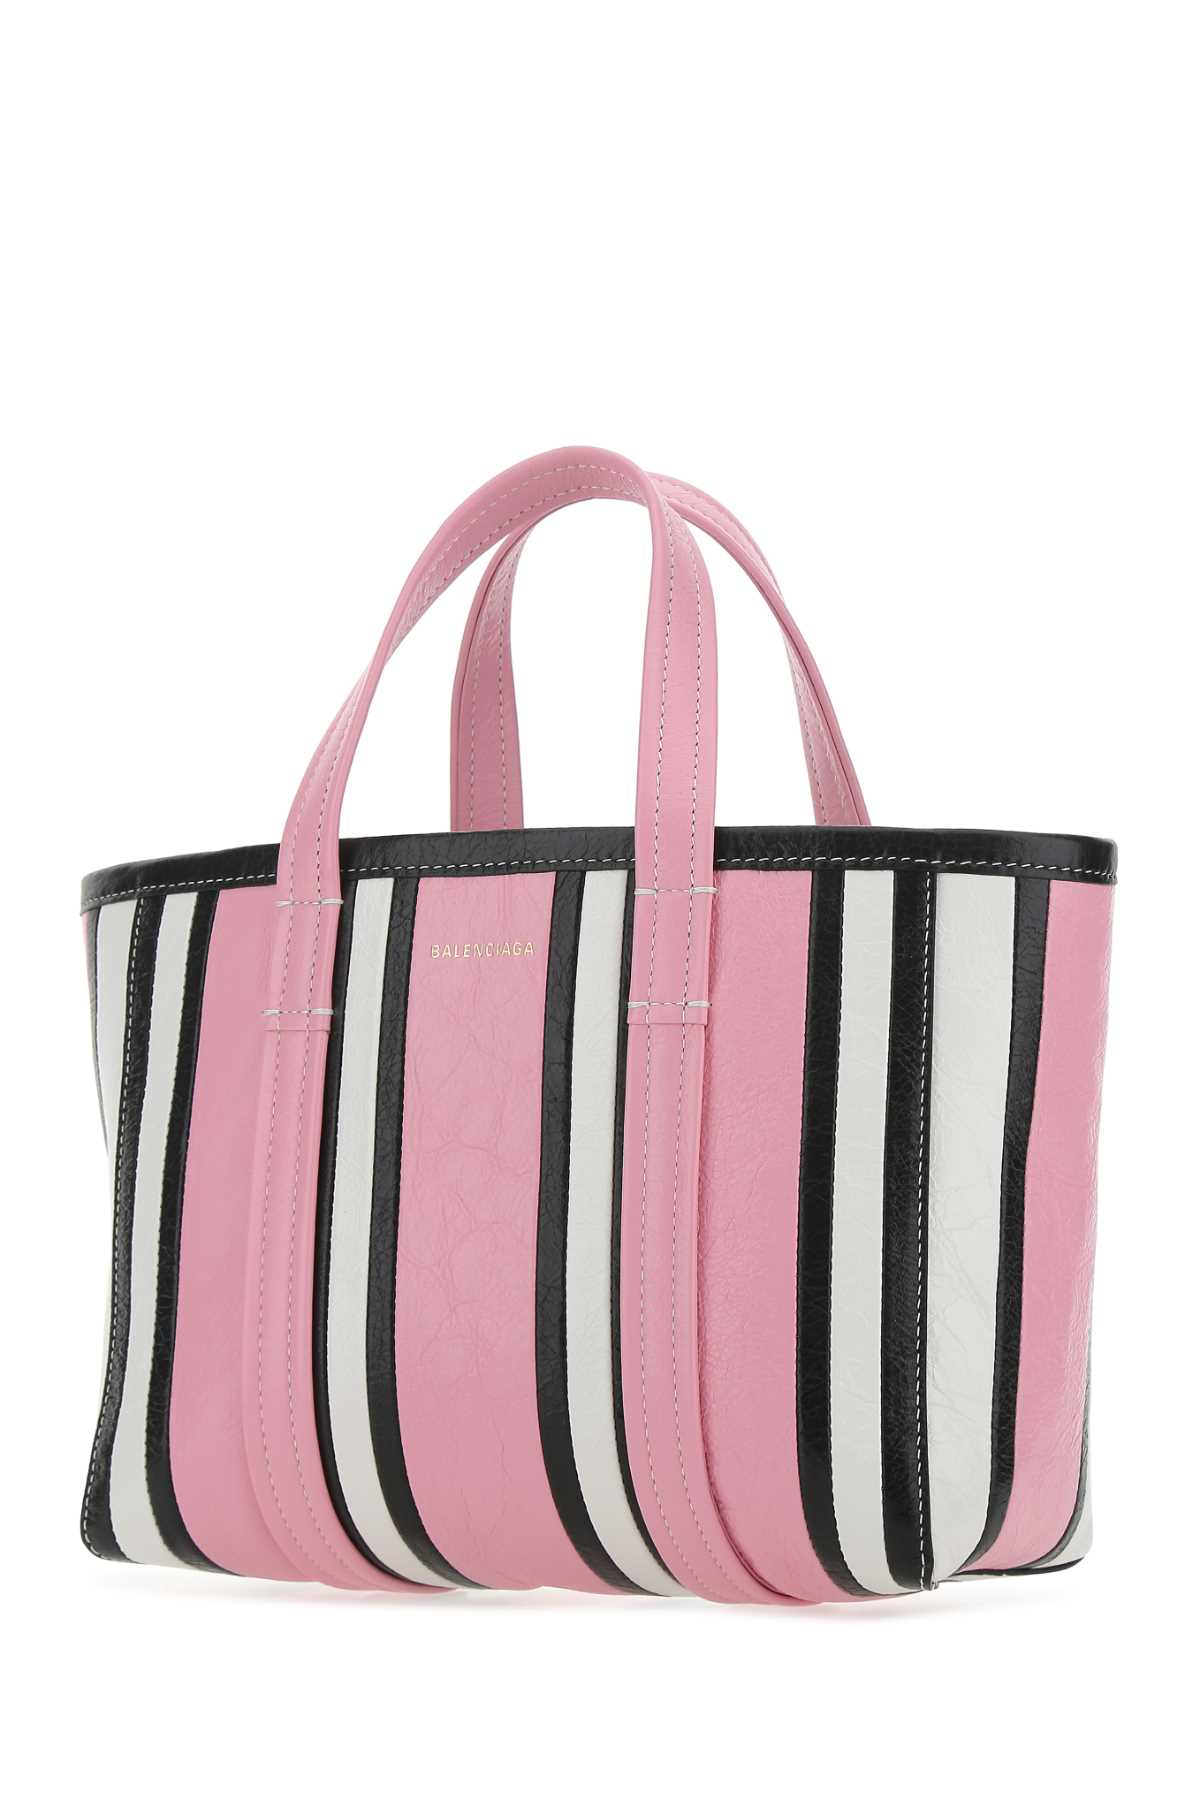 Balenciaga Multicolor Leather Small Barbes Shopping Bag In 5960